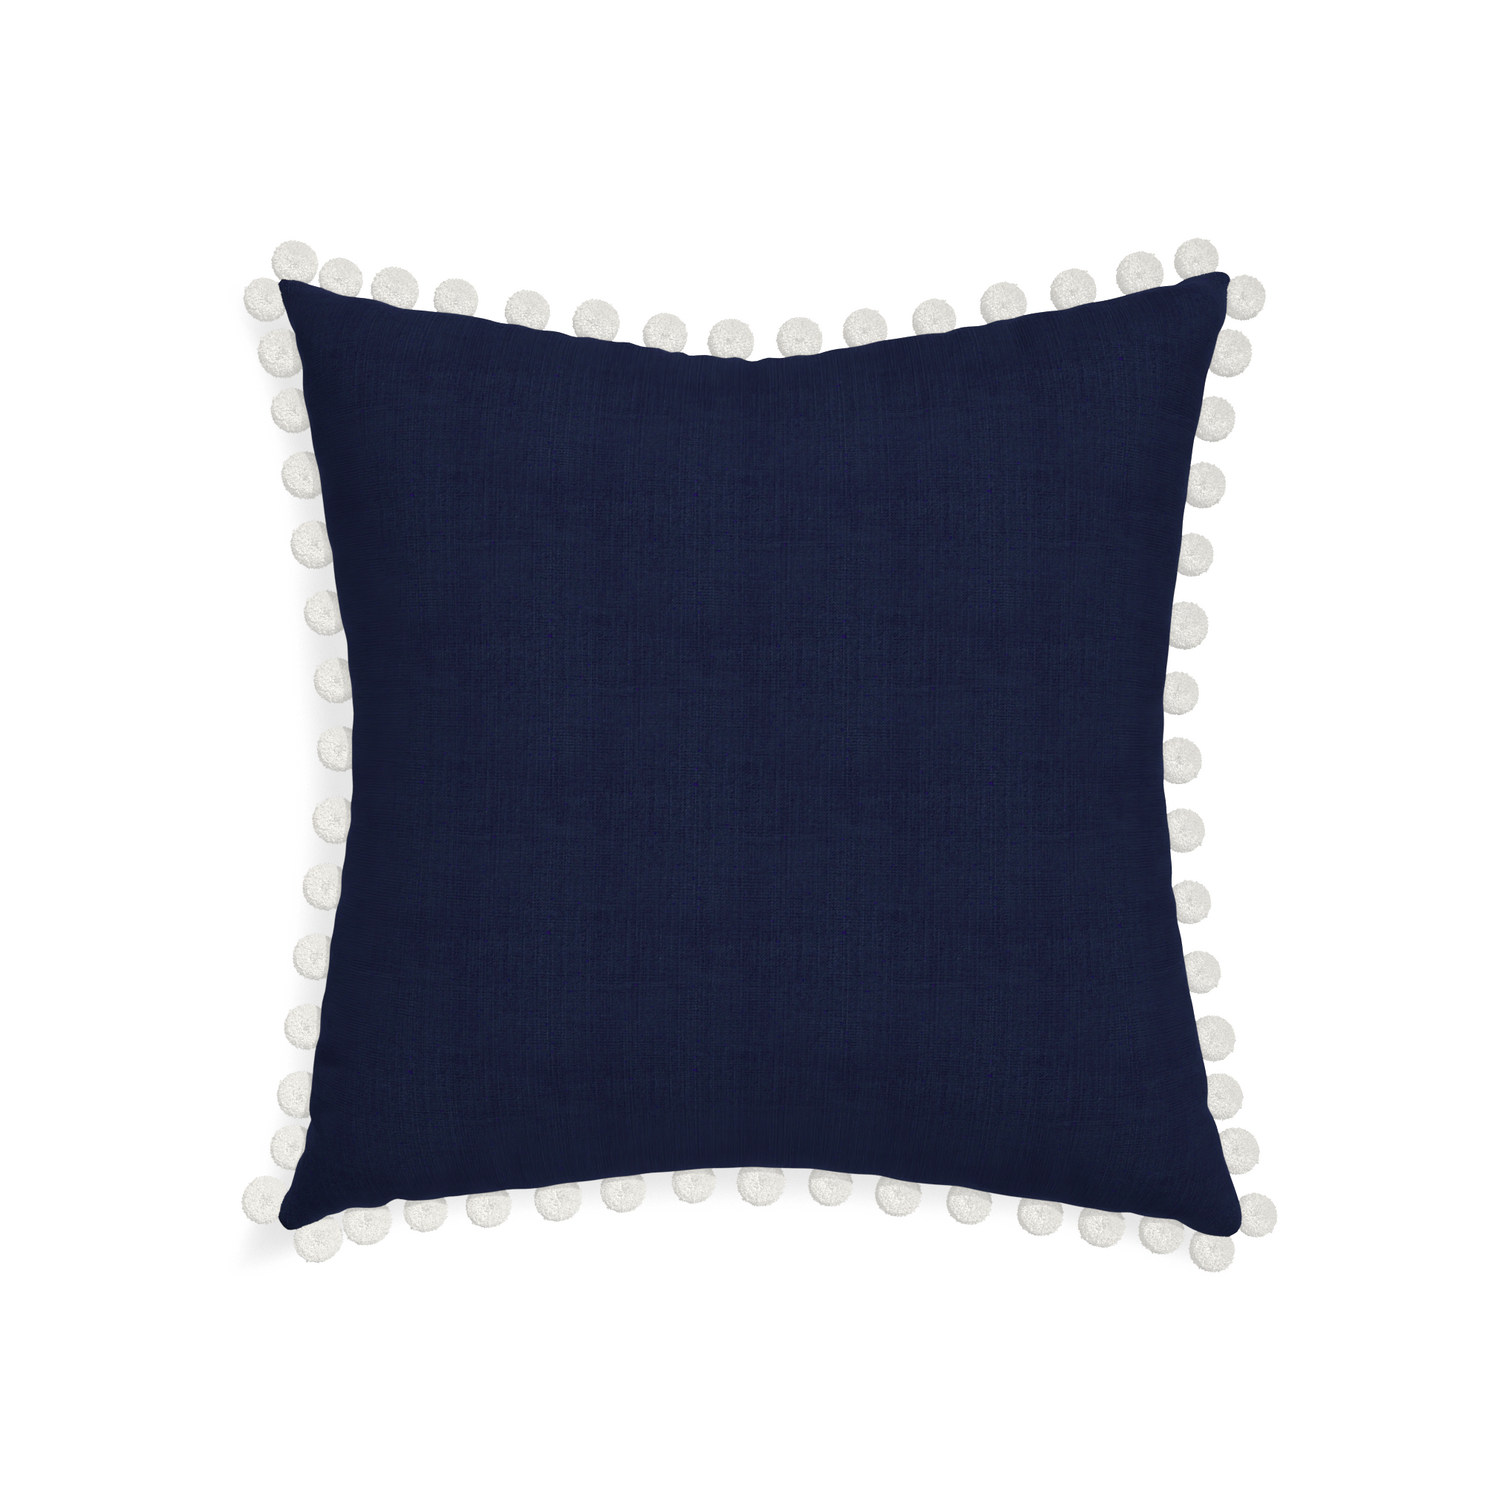 22-square midnight custom pillow with snow pom pom on white background